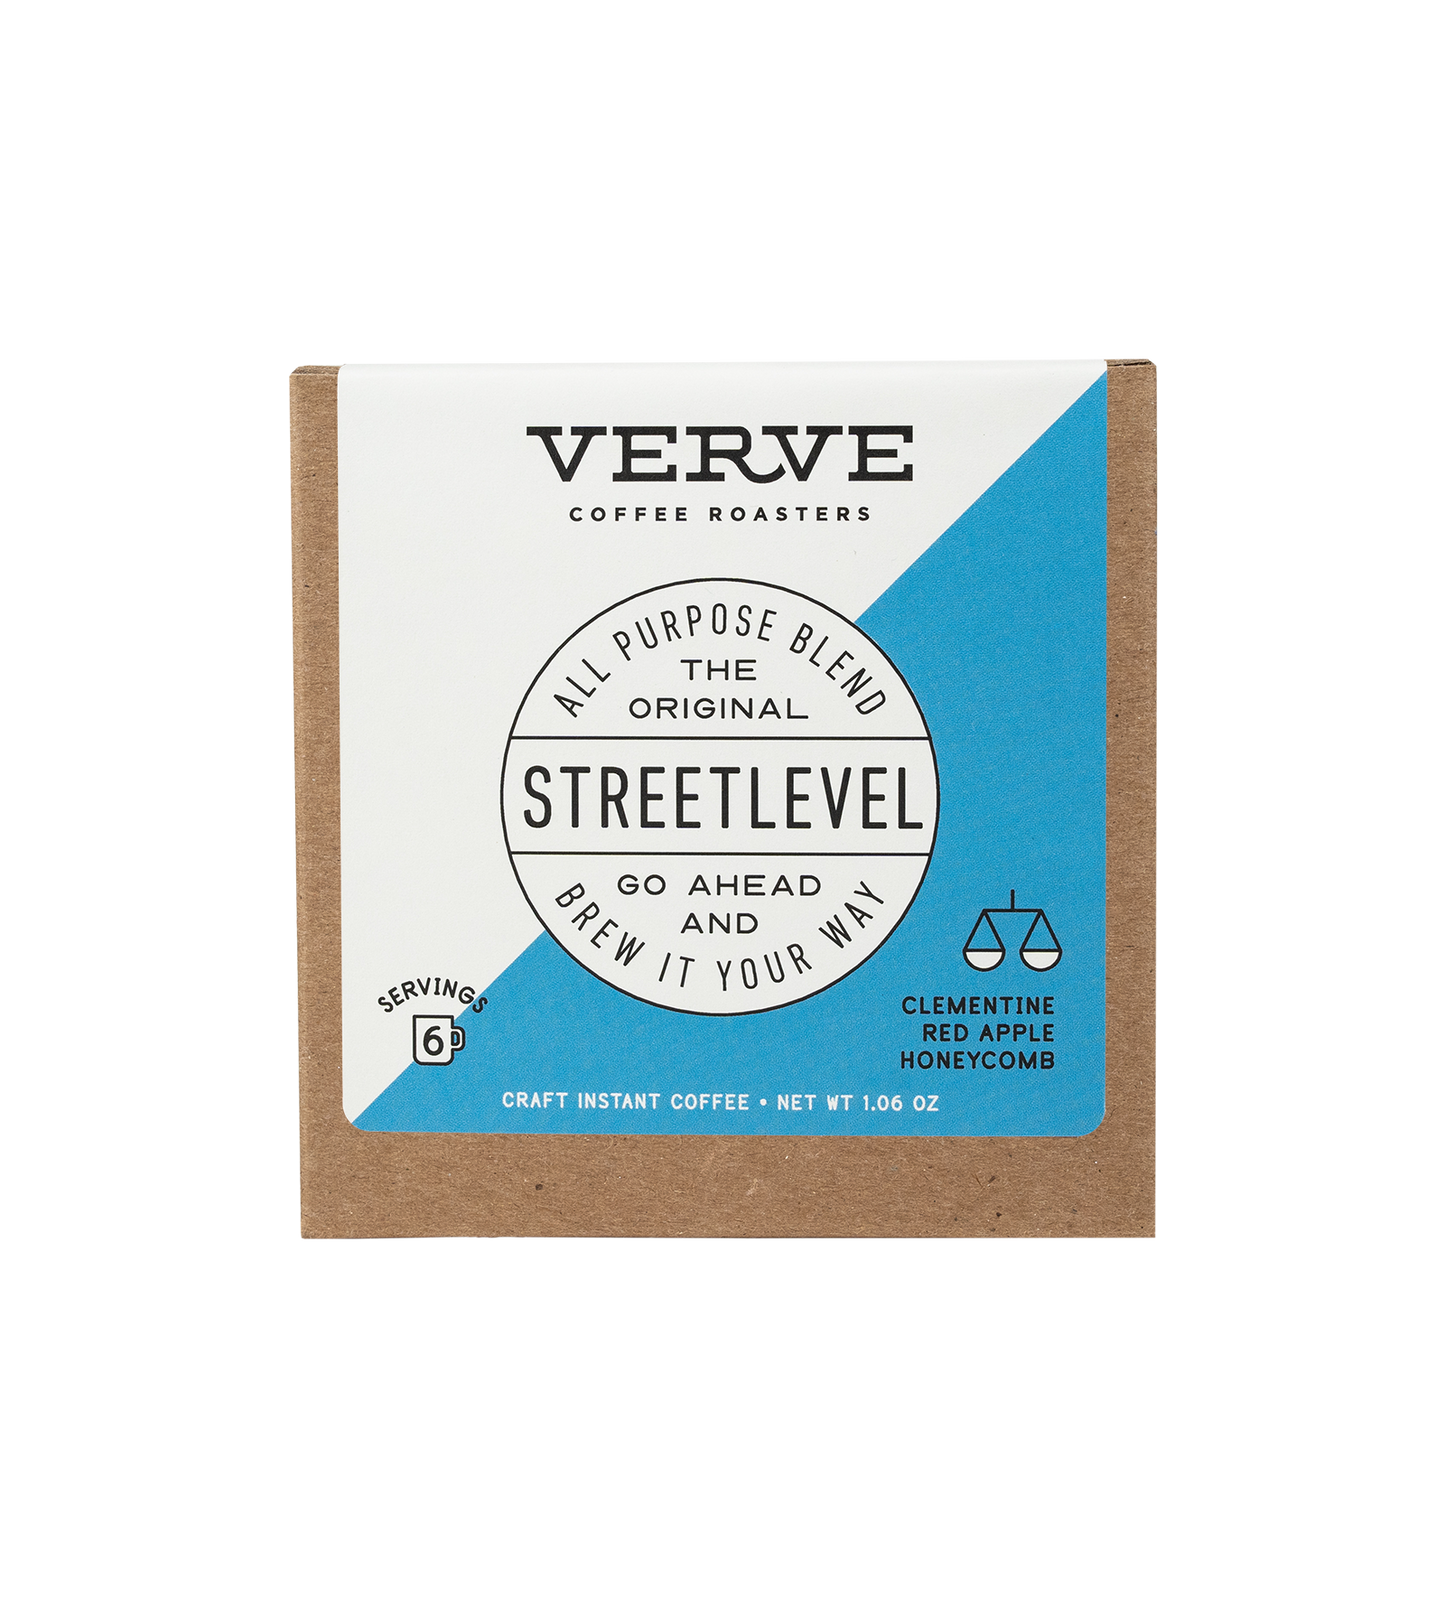 Streetlevel craft instant coffee